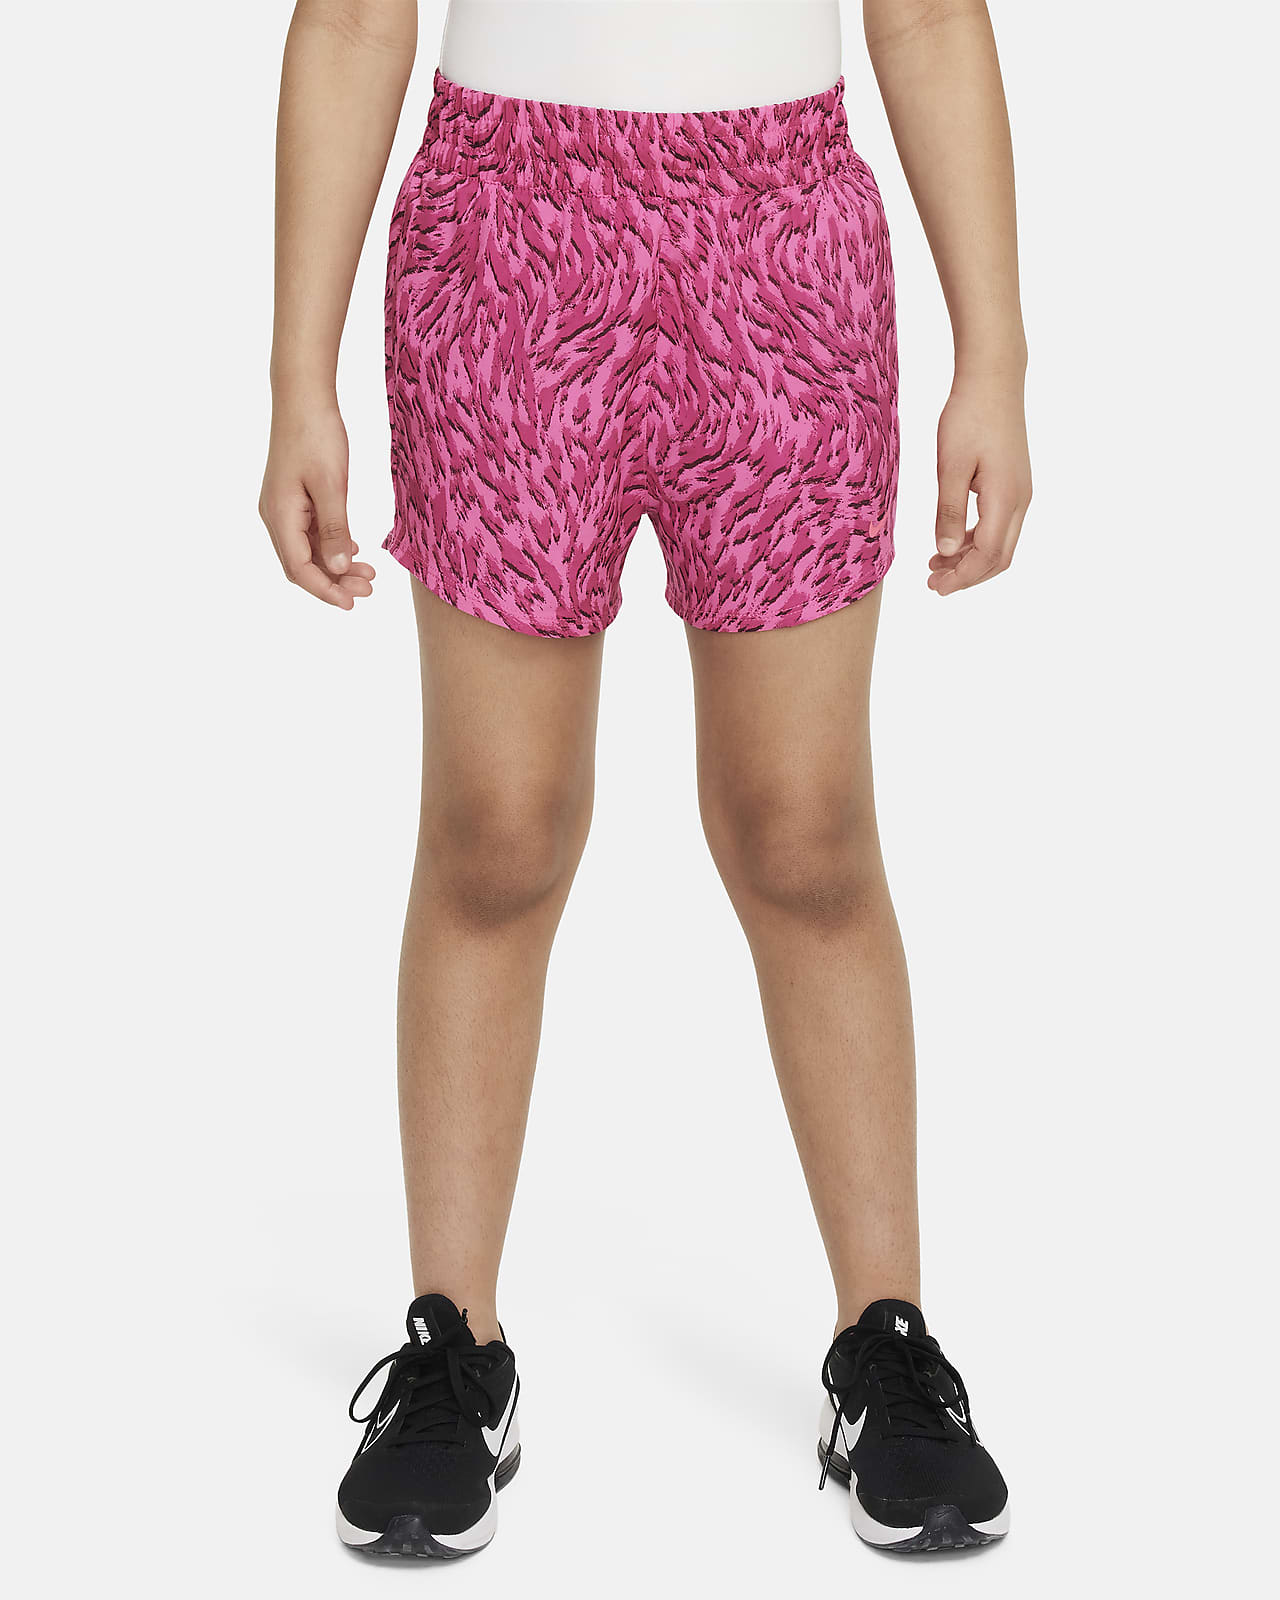 Nike One geweven shorts met hoge taille voor meisjes